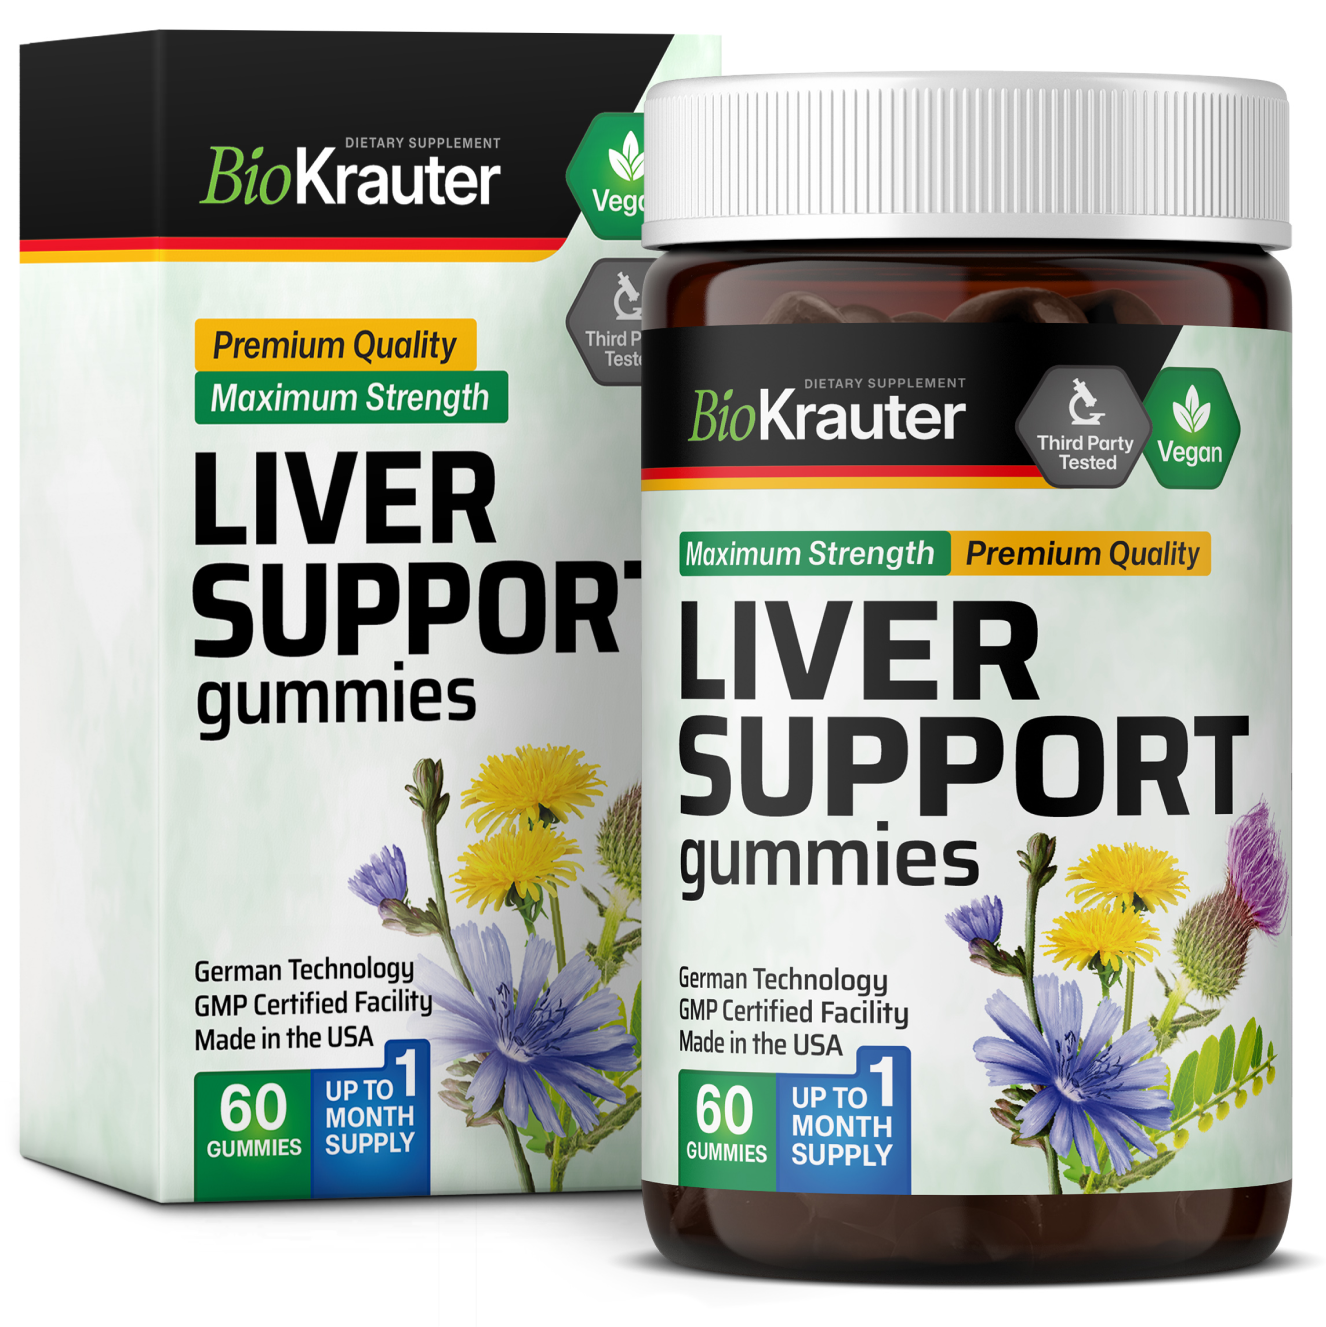 Liver Support Gummies